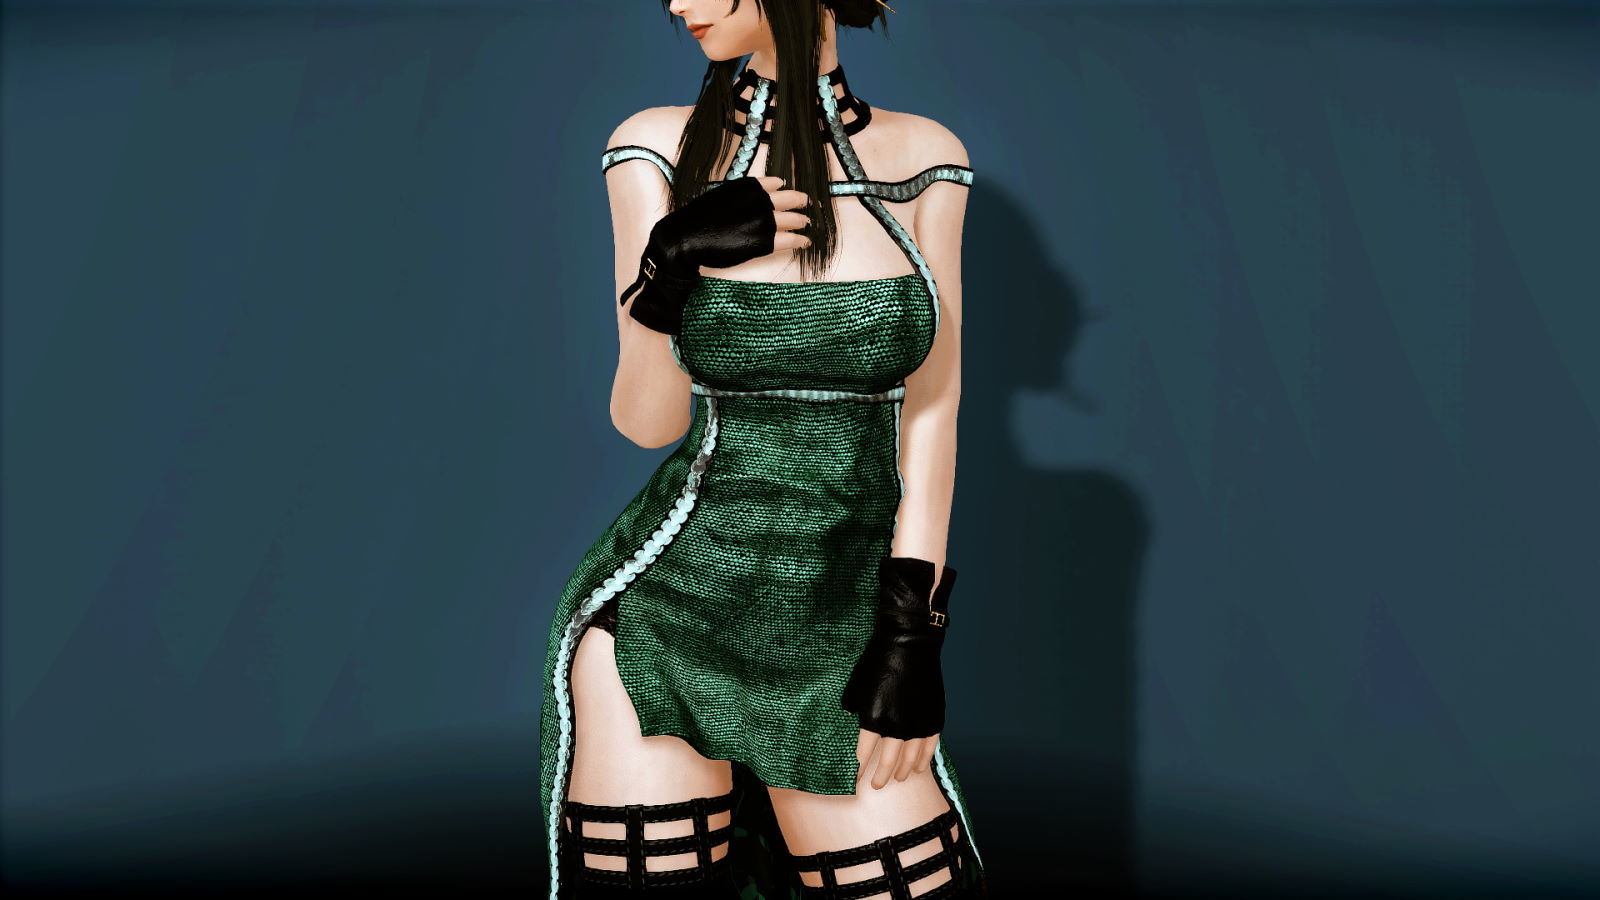 ThornPrincessSSE 123-1 Pose Dress Emerald 1